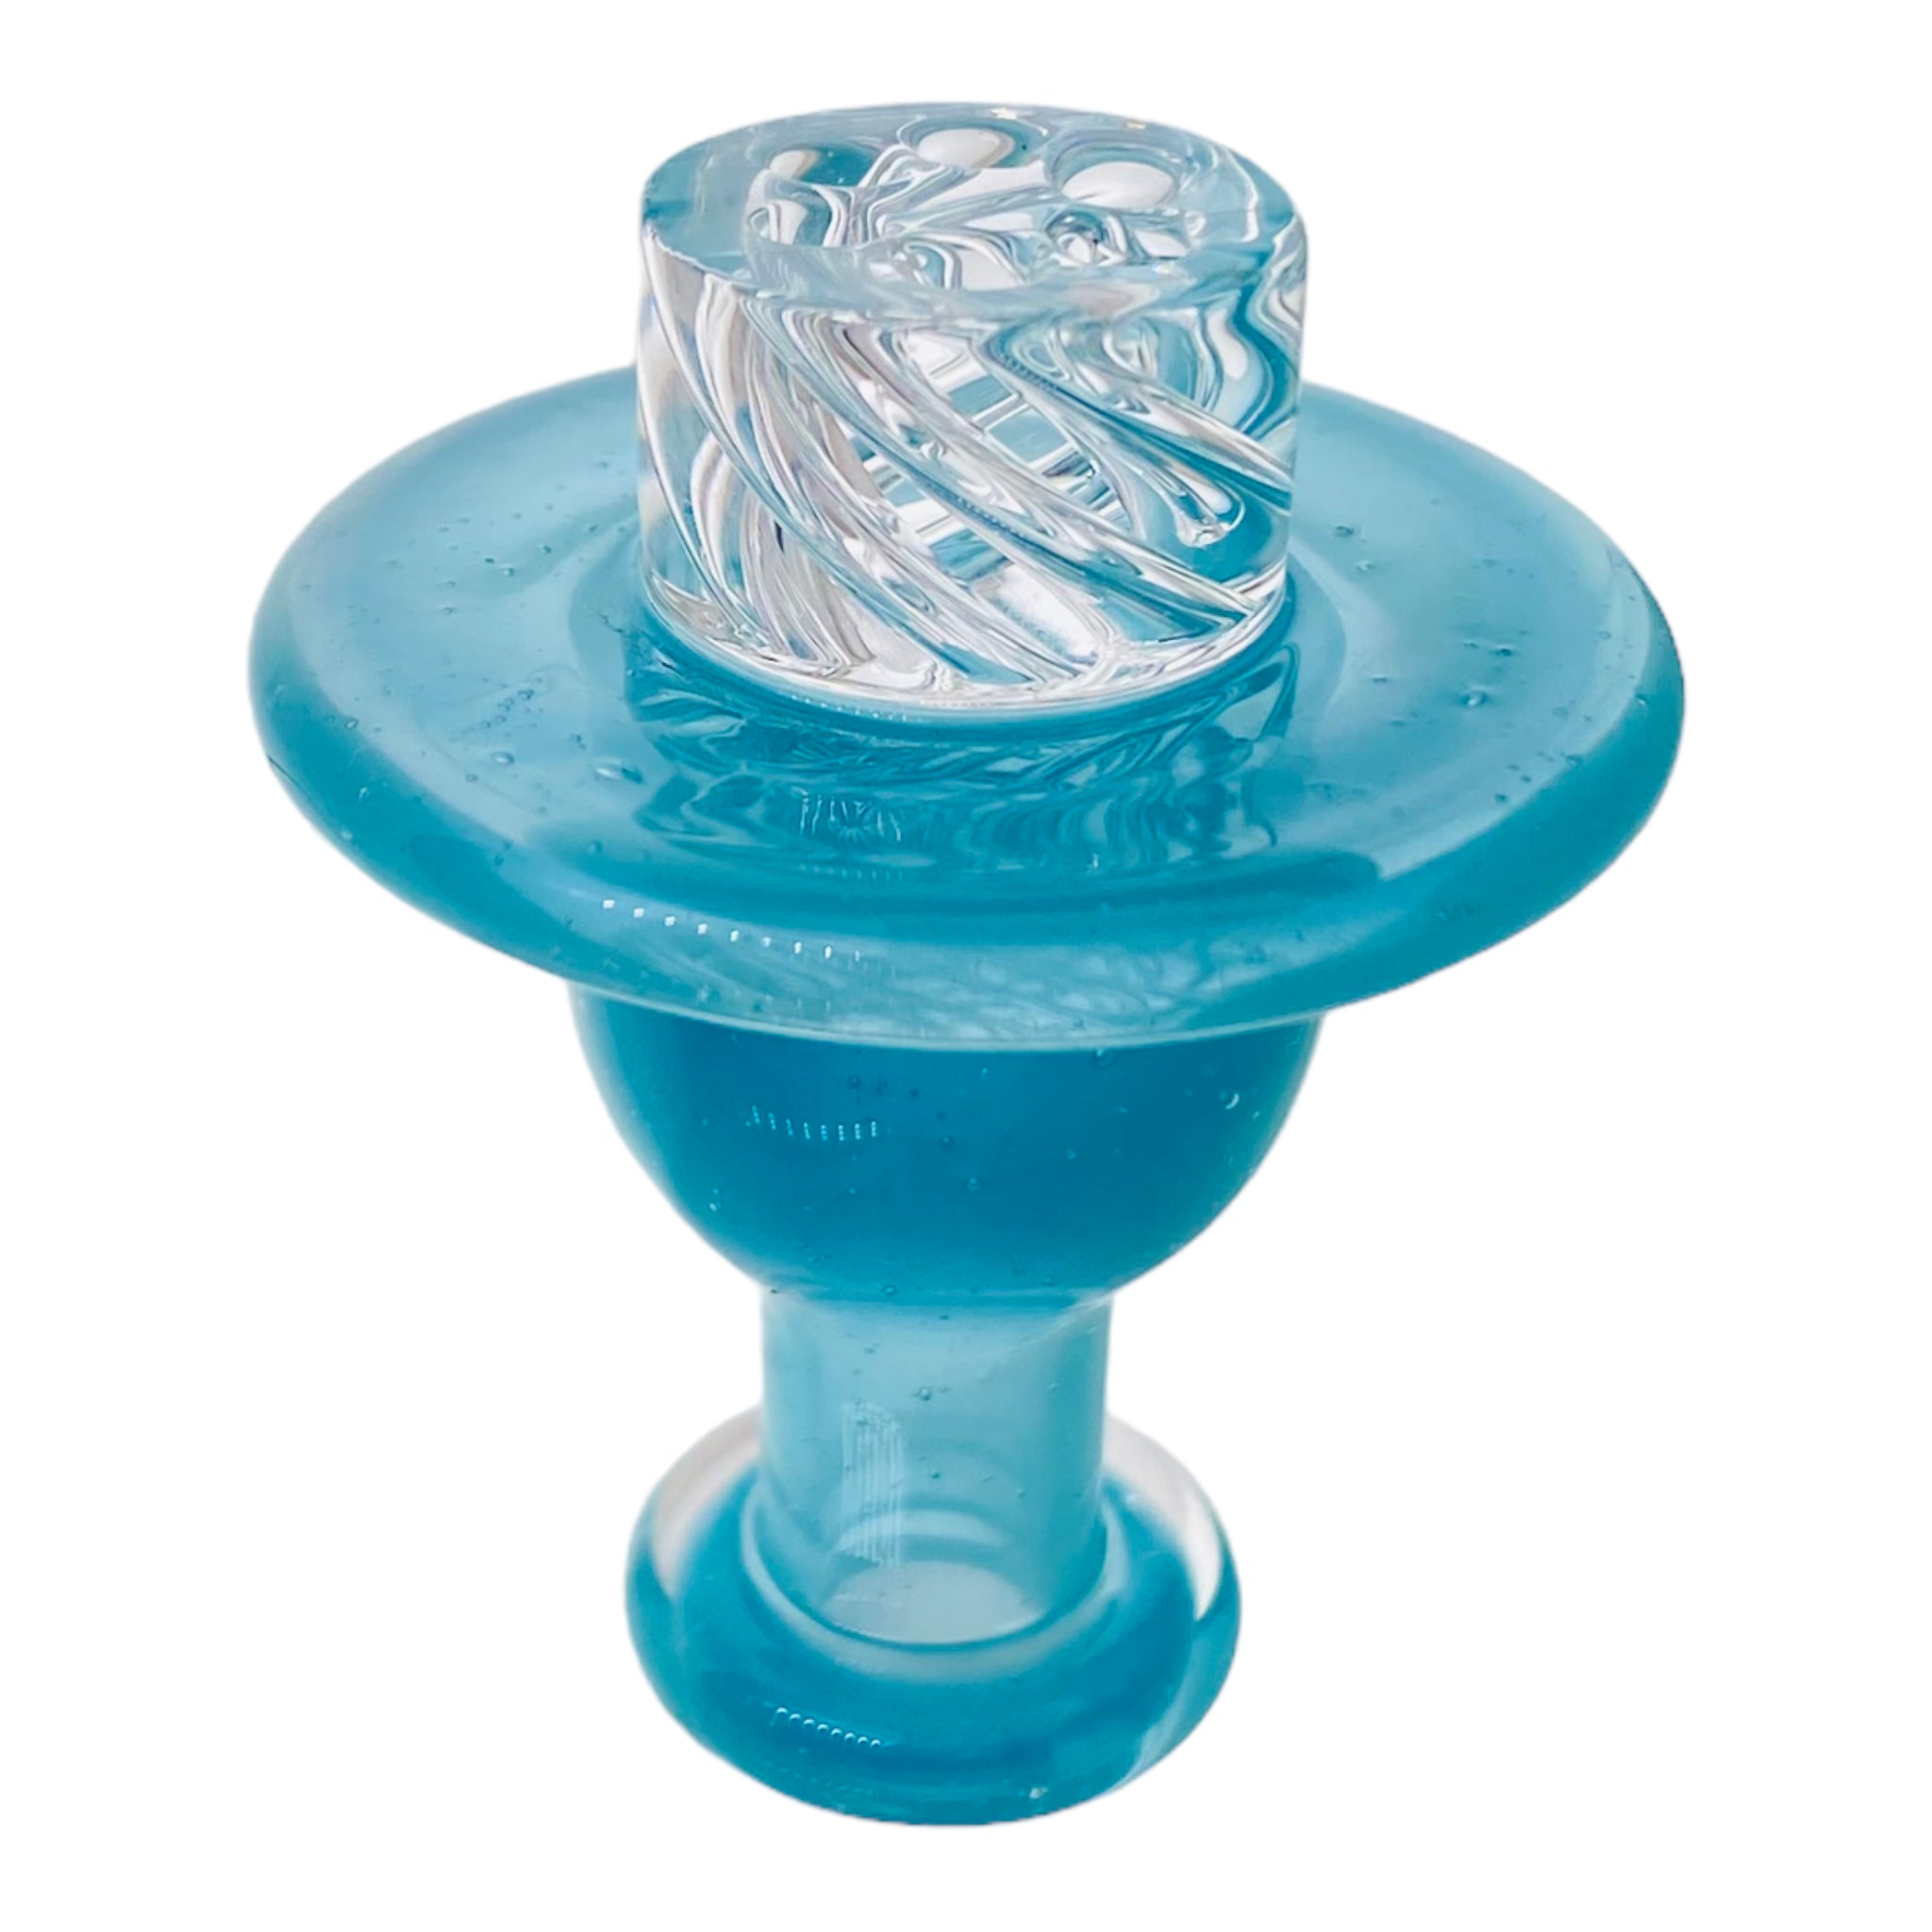 Gordo Scientific's Blue OG Riptide Spinner Carb Cap